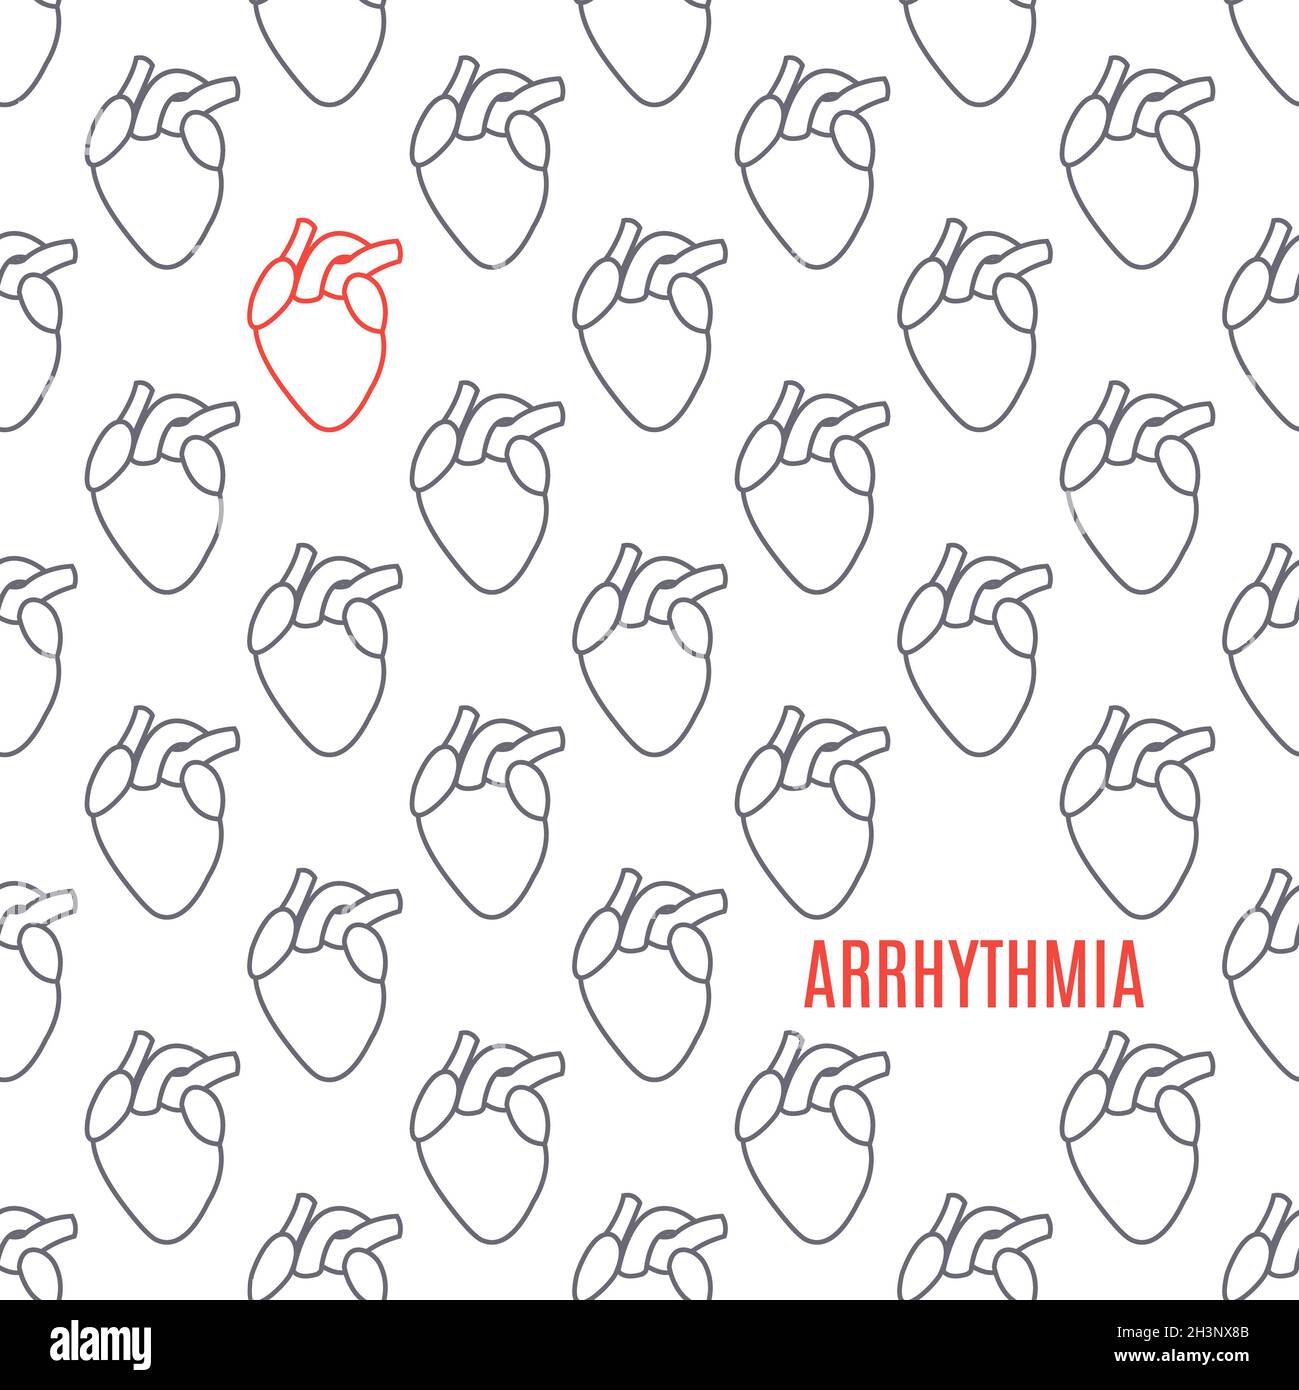 Arrhythmia awareness, conceptual illustration Stock Photo